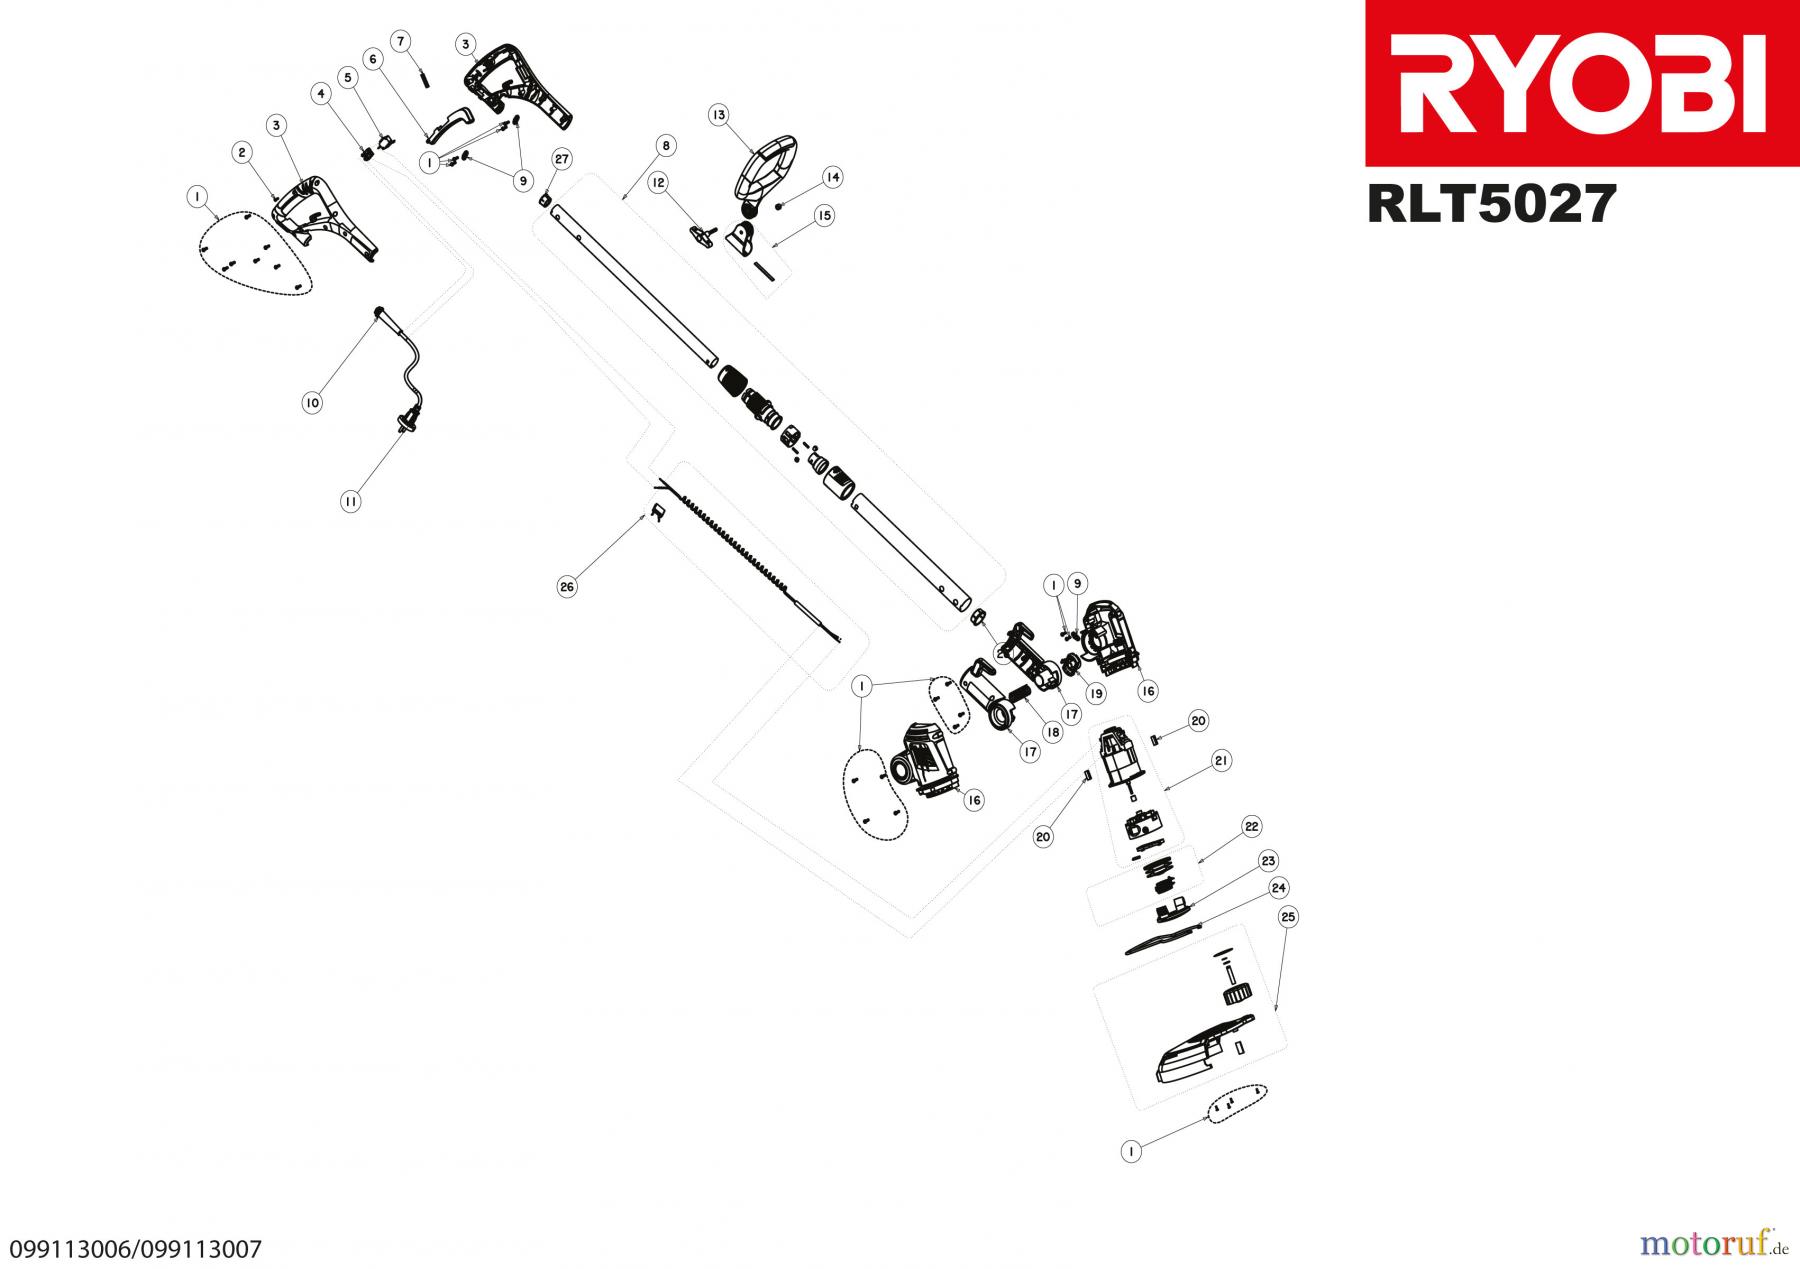  Ryobi Rasentrimmer Elektro RLT5027